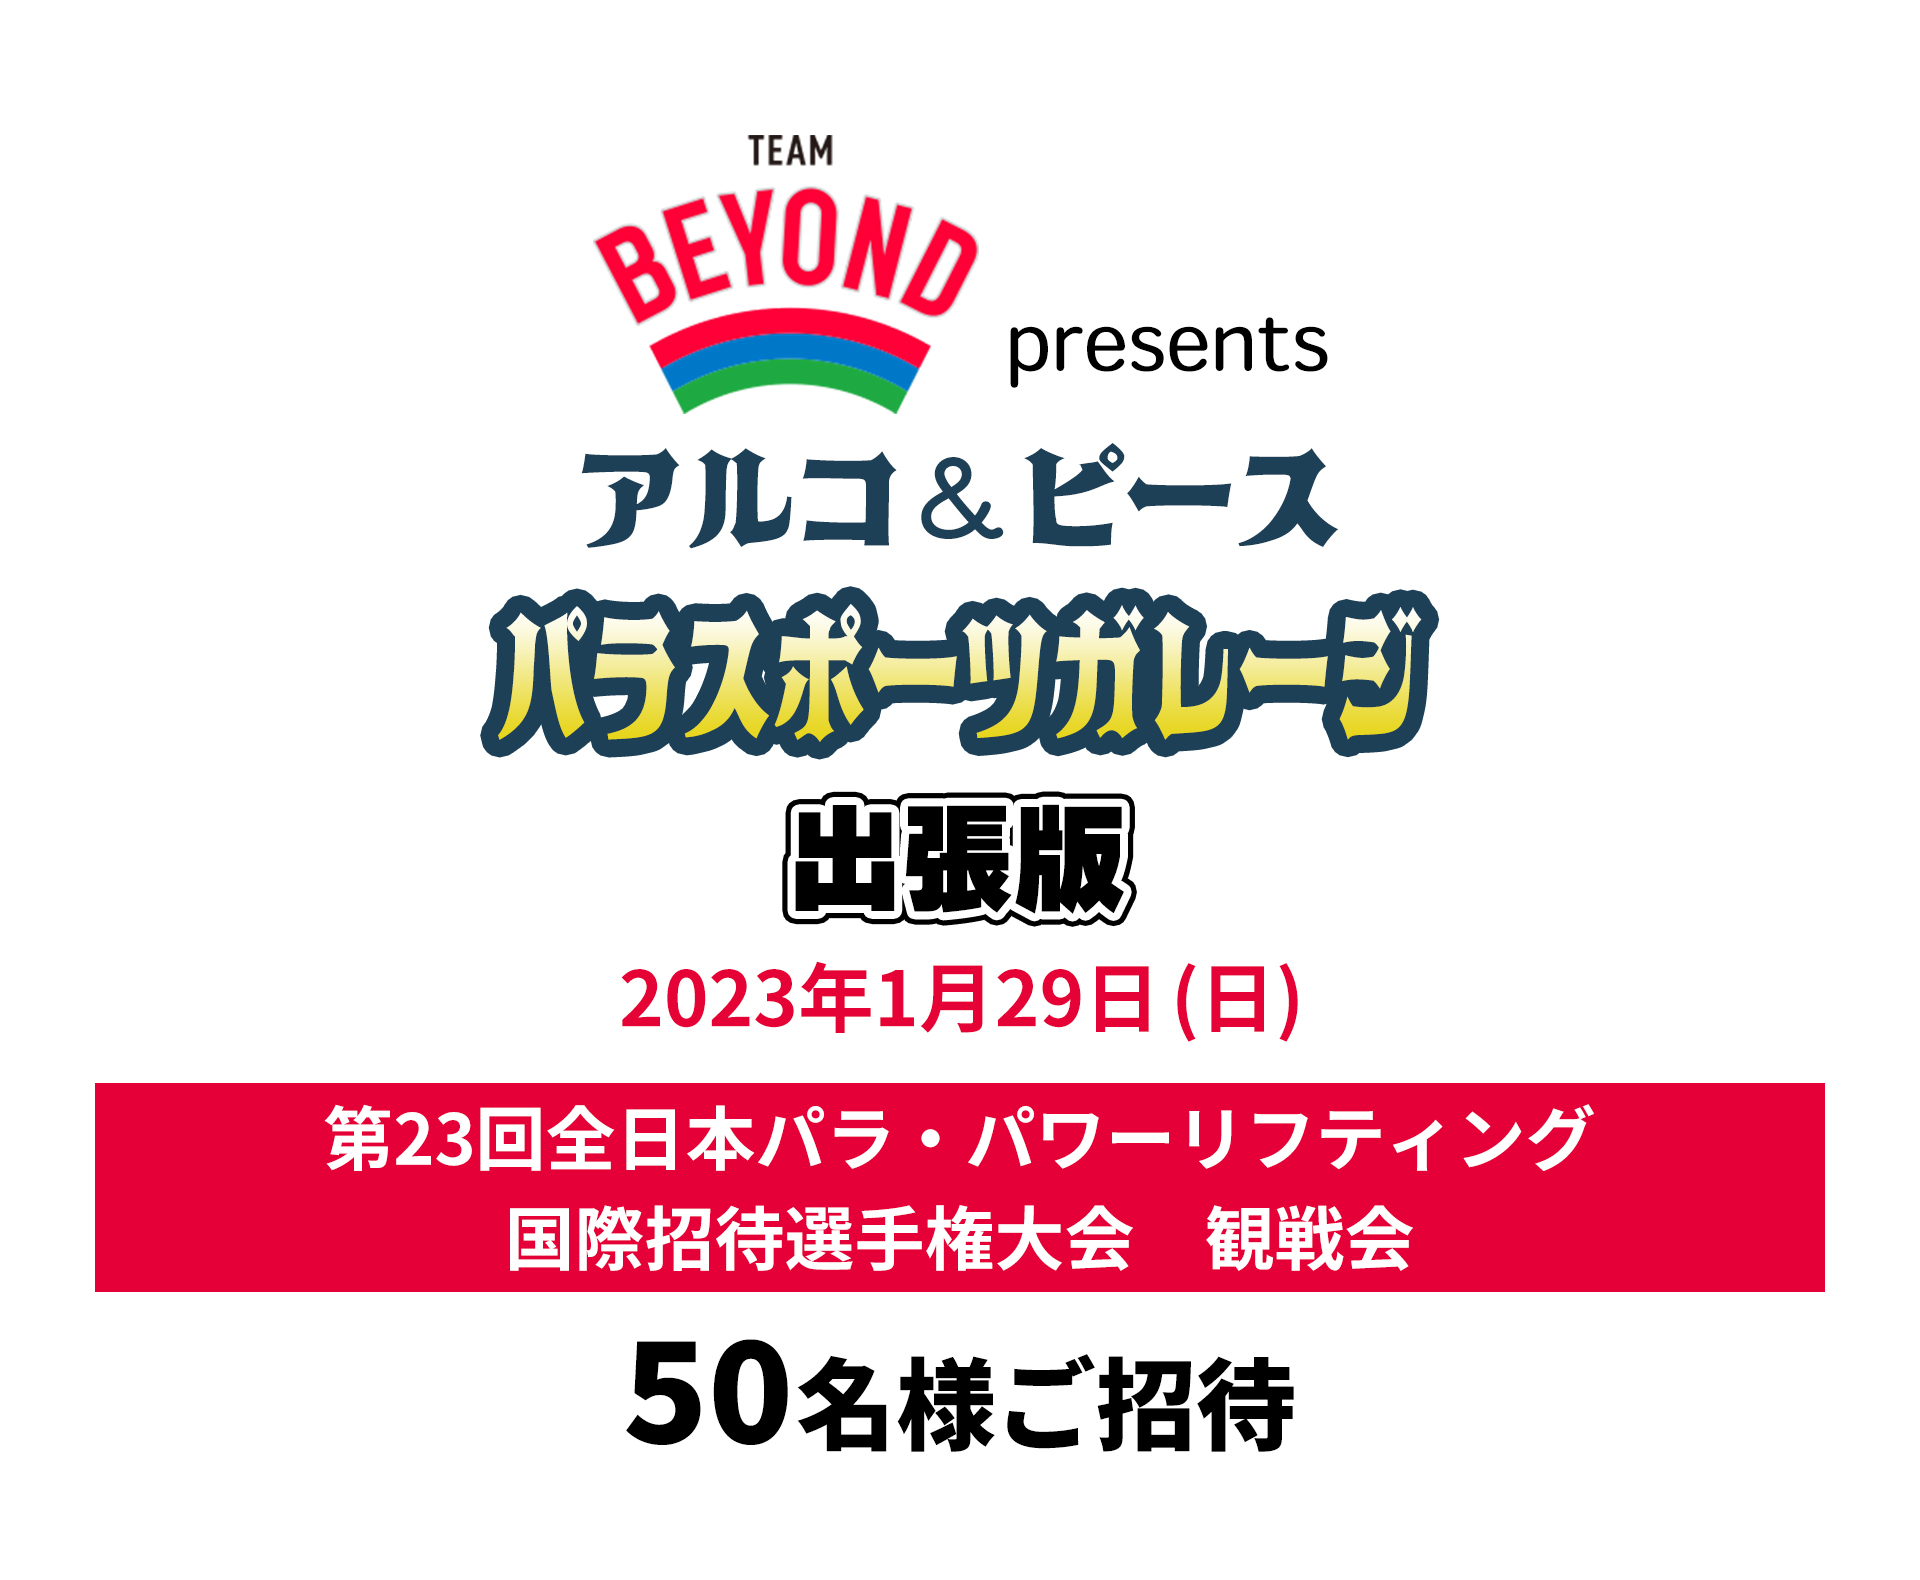 TEAM BEYOND presents アルコ&ピース パラスポーツガレージ出張版​<br>第23回全日本パラ・パワーリフティング国際招待選手権大会　観戦会​